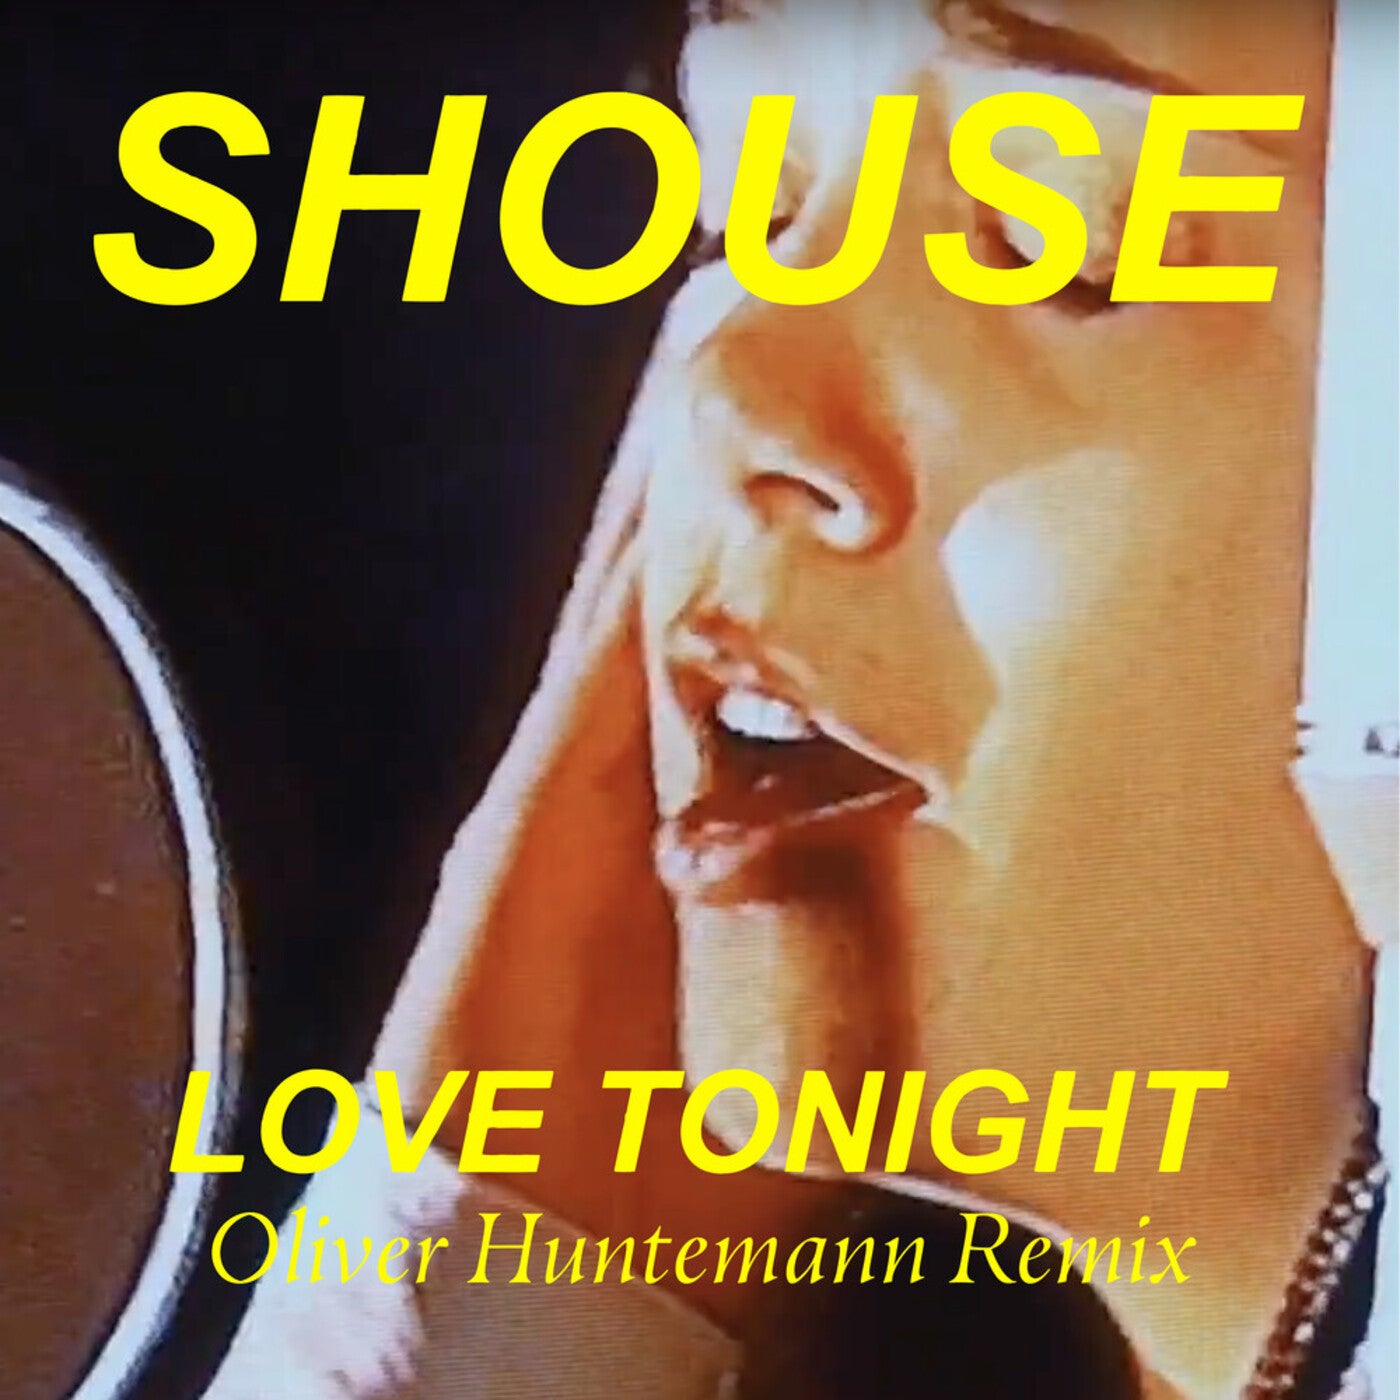 image cover: Shouse - Love Tonight (Oliver Huntemann Remix) / HB021